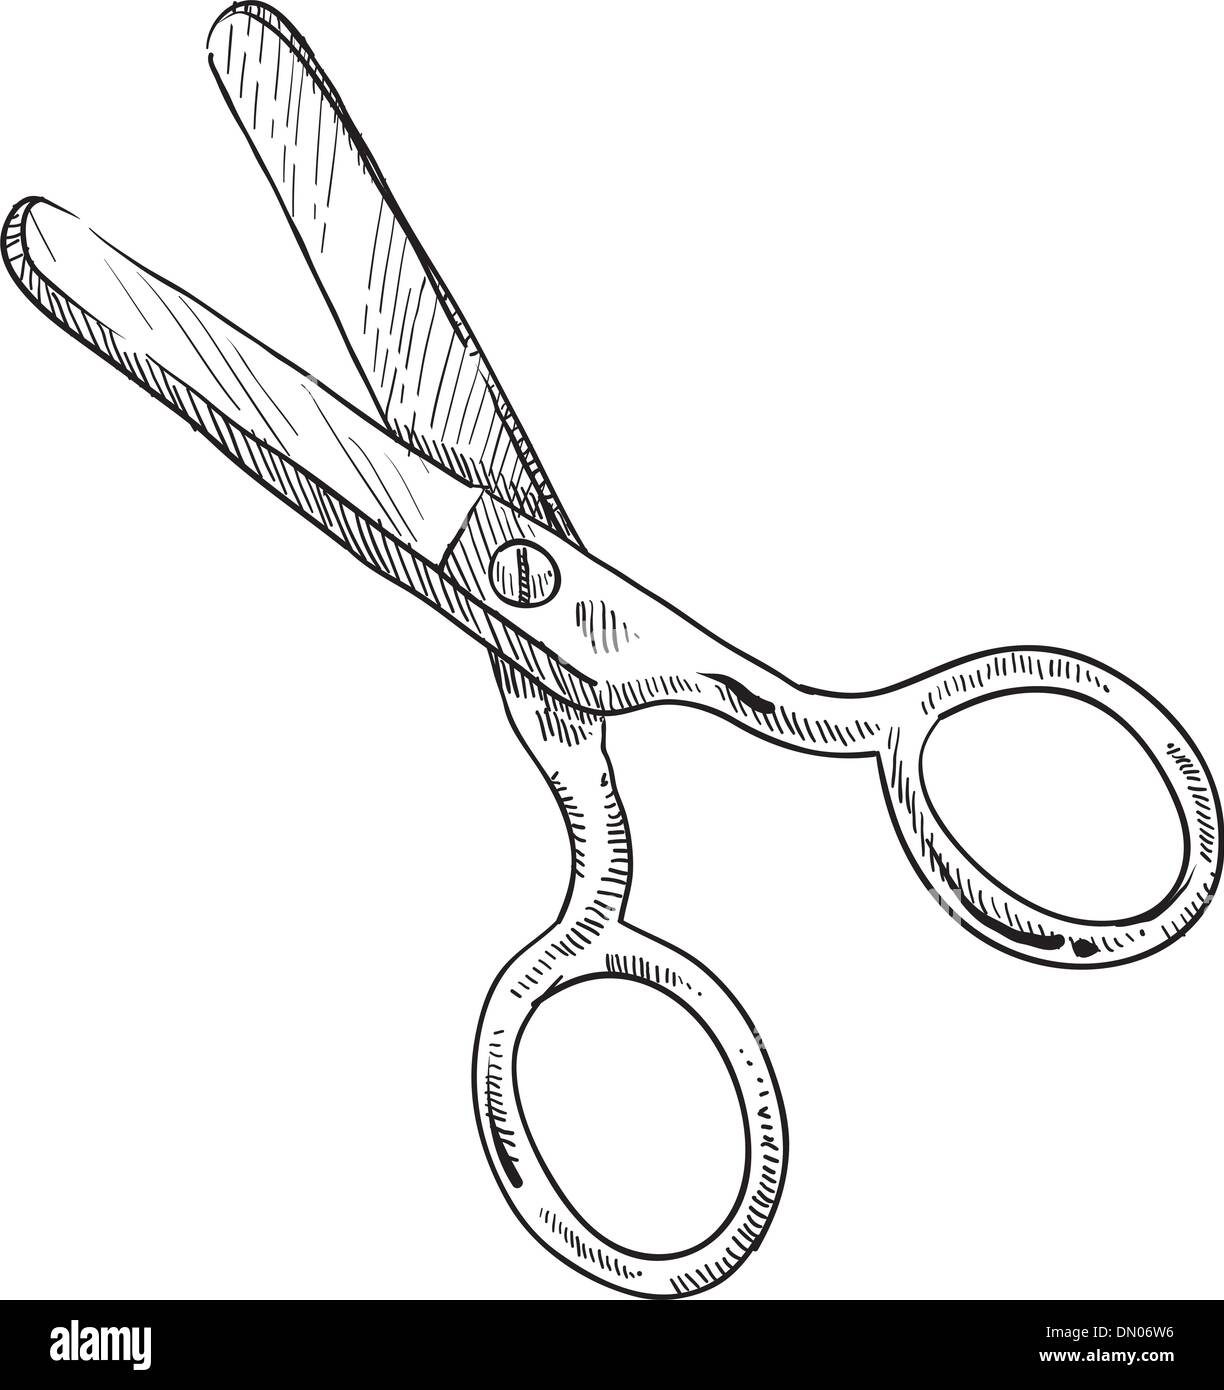 Vector Single Sketch Scissors On White Background Lizenzfrei nutzbare SVG  Vektorgrafiken Clip Arts Illustrationen Image 63194886